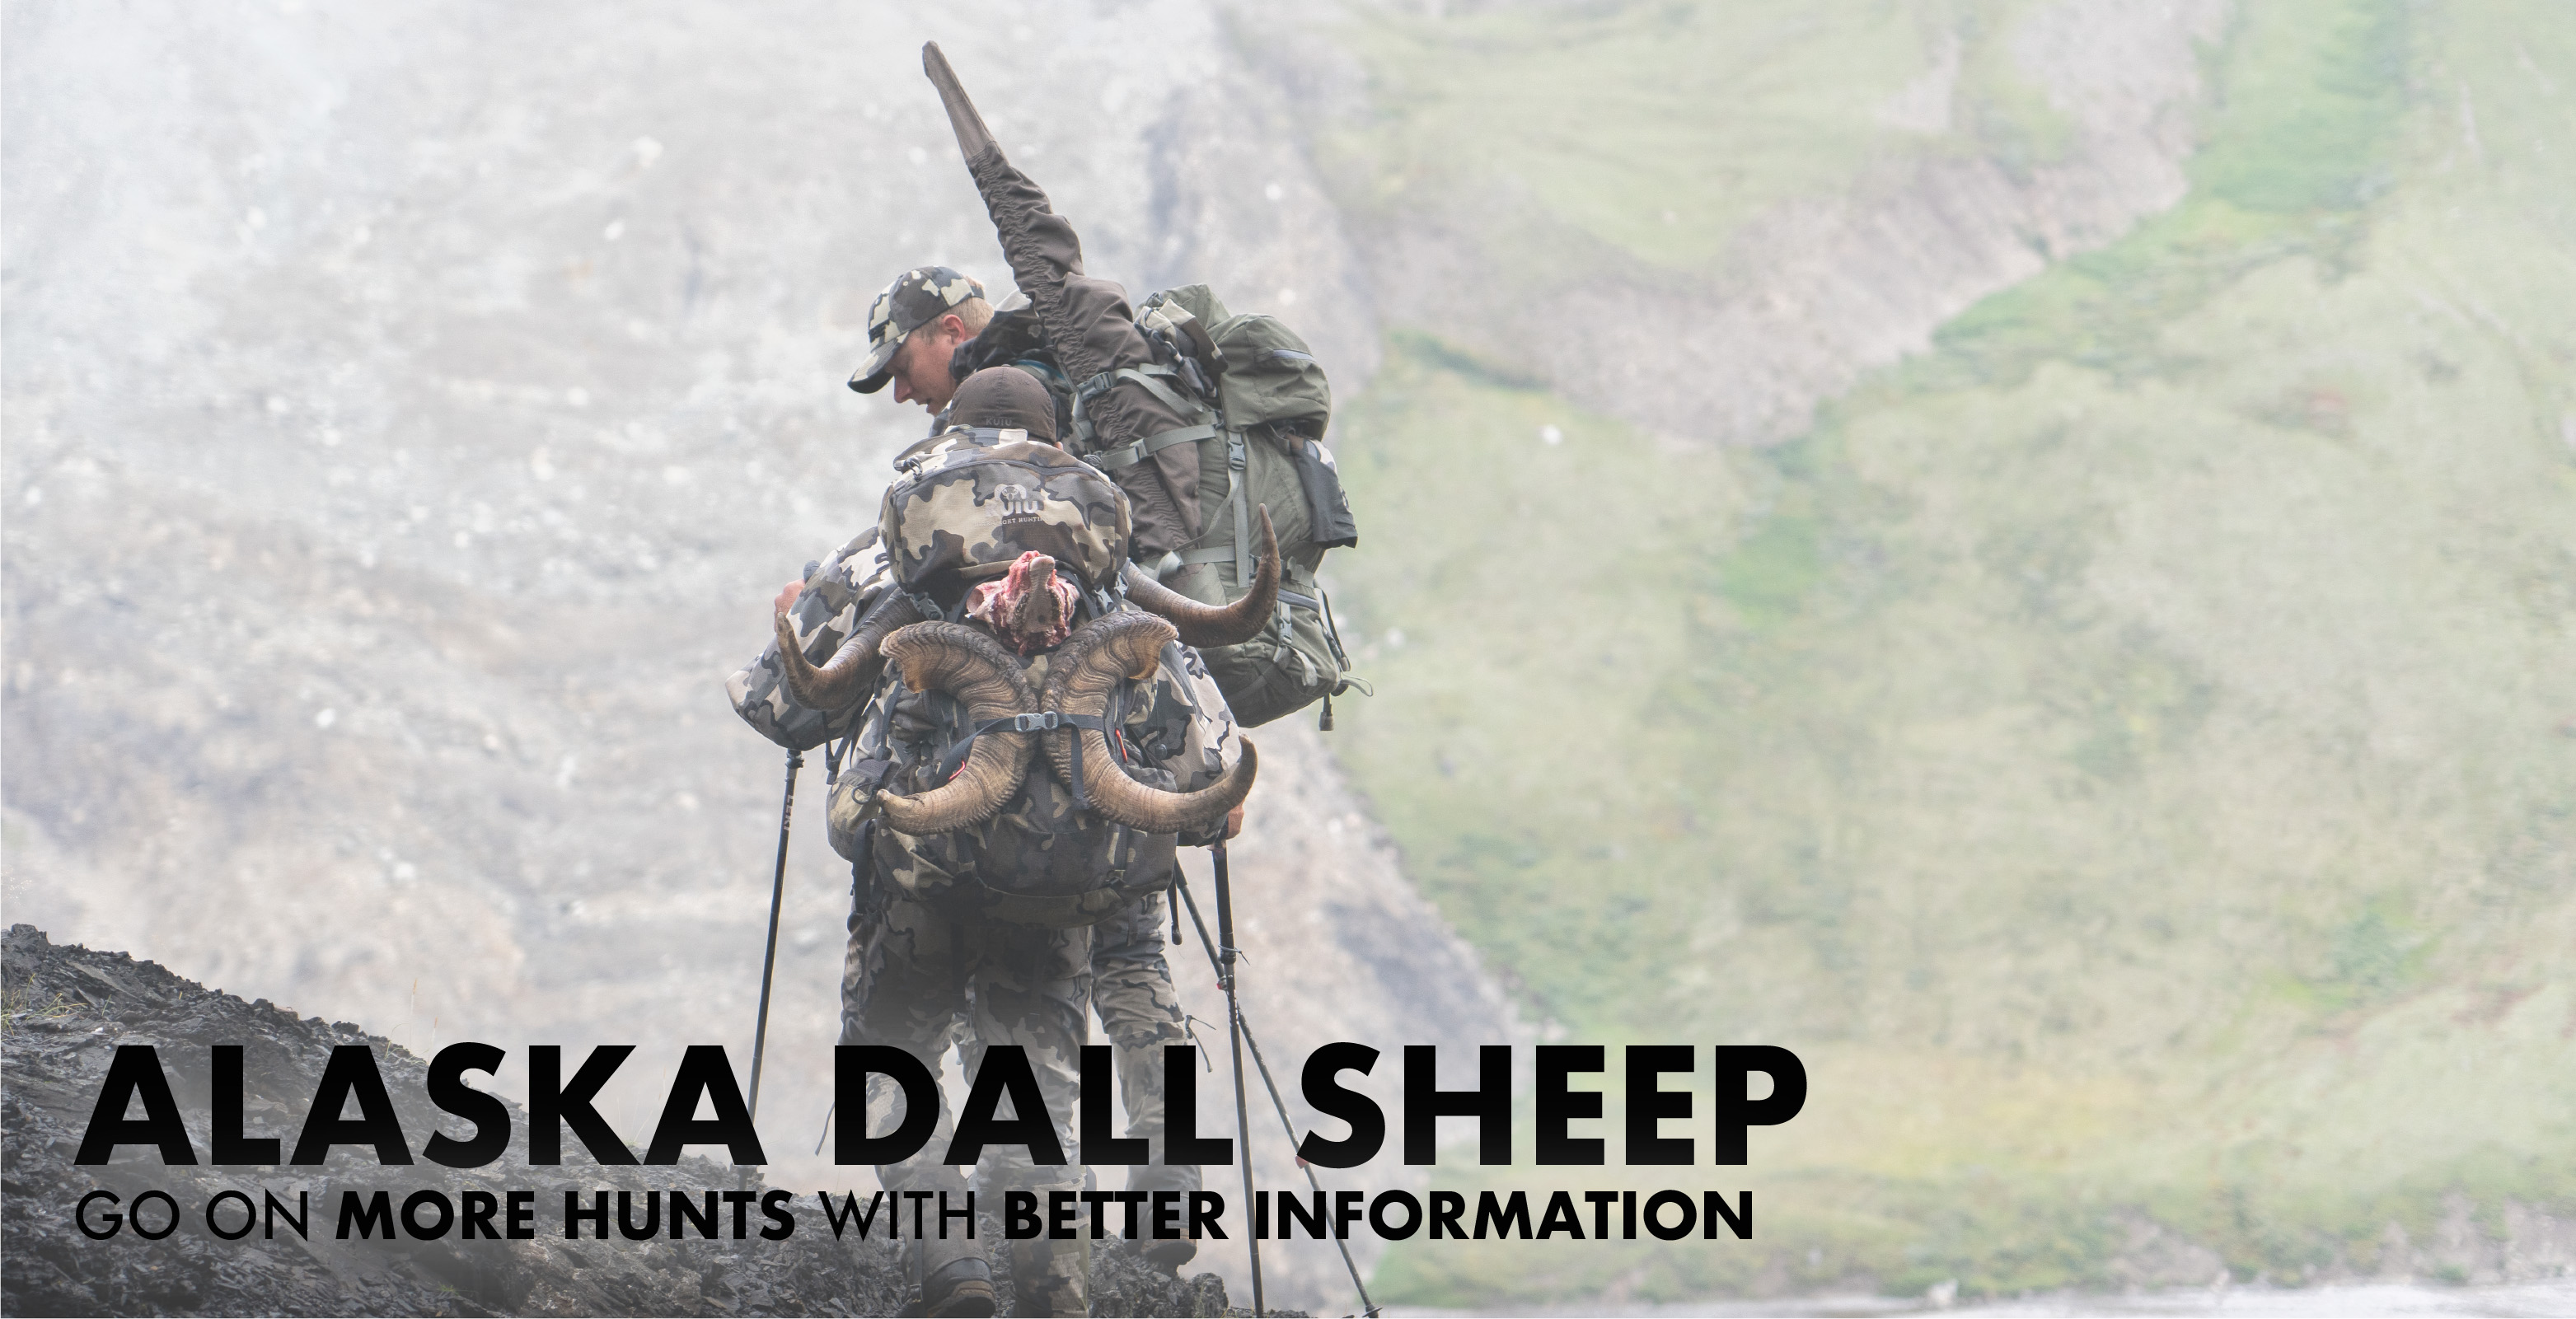 Alaska Dall Sheep Hunting